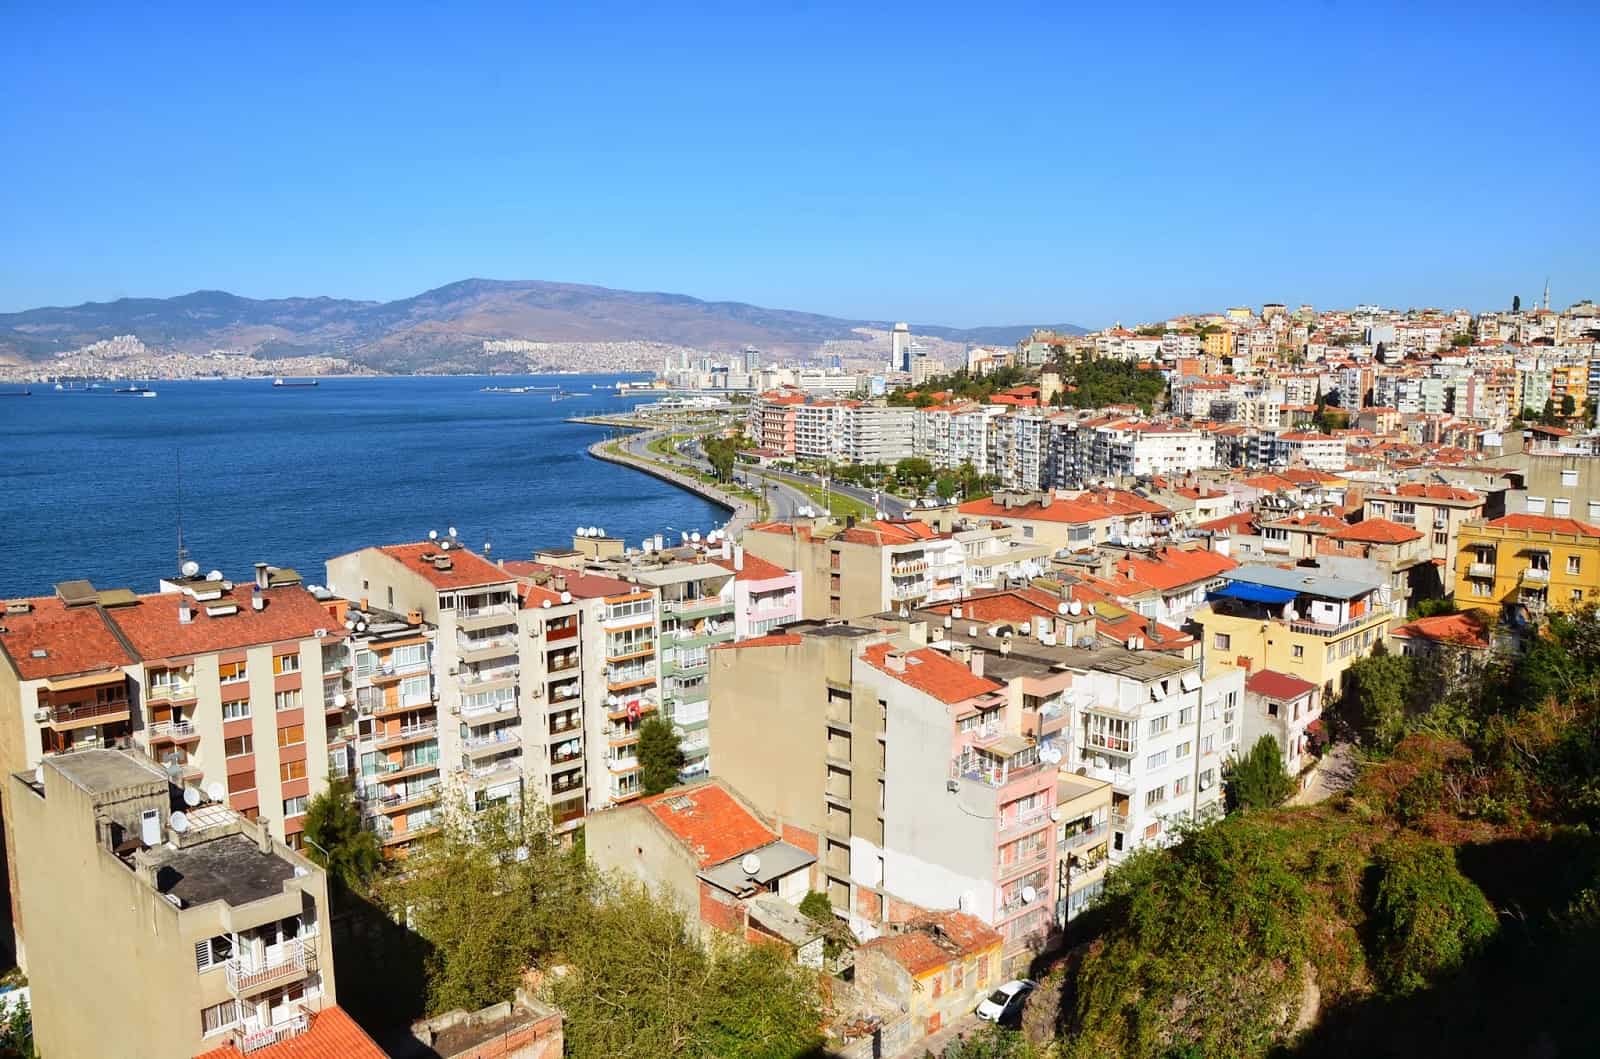 View from the top of Asansör in Izmir, Turkey